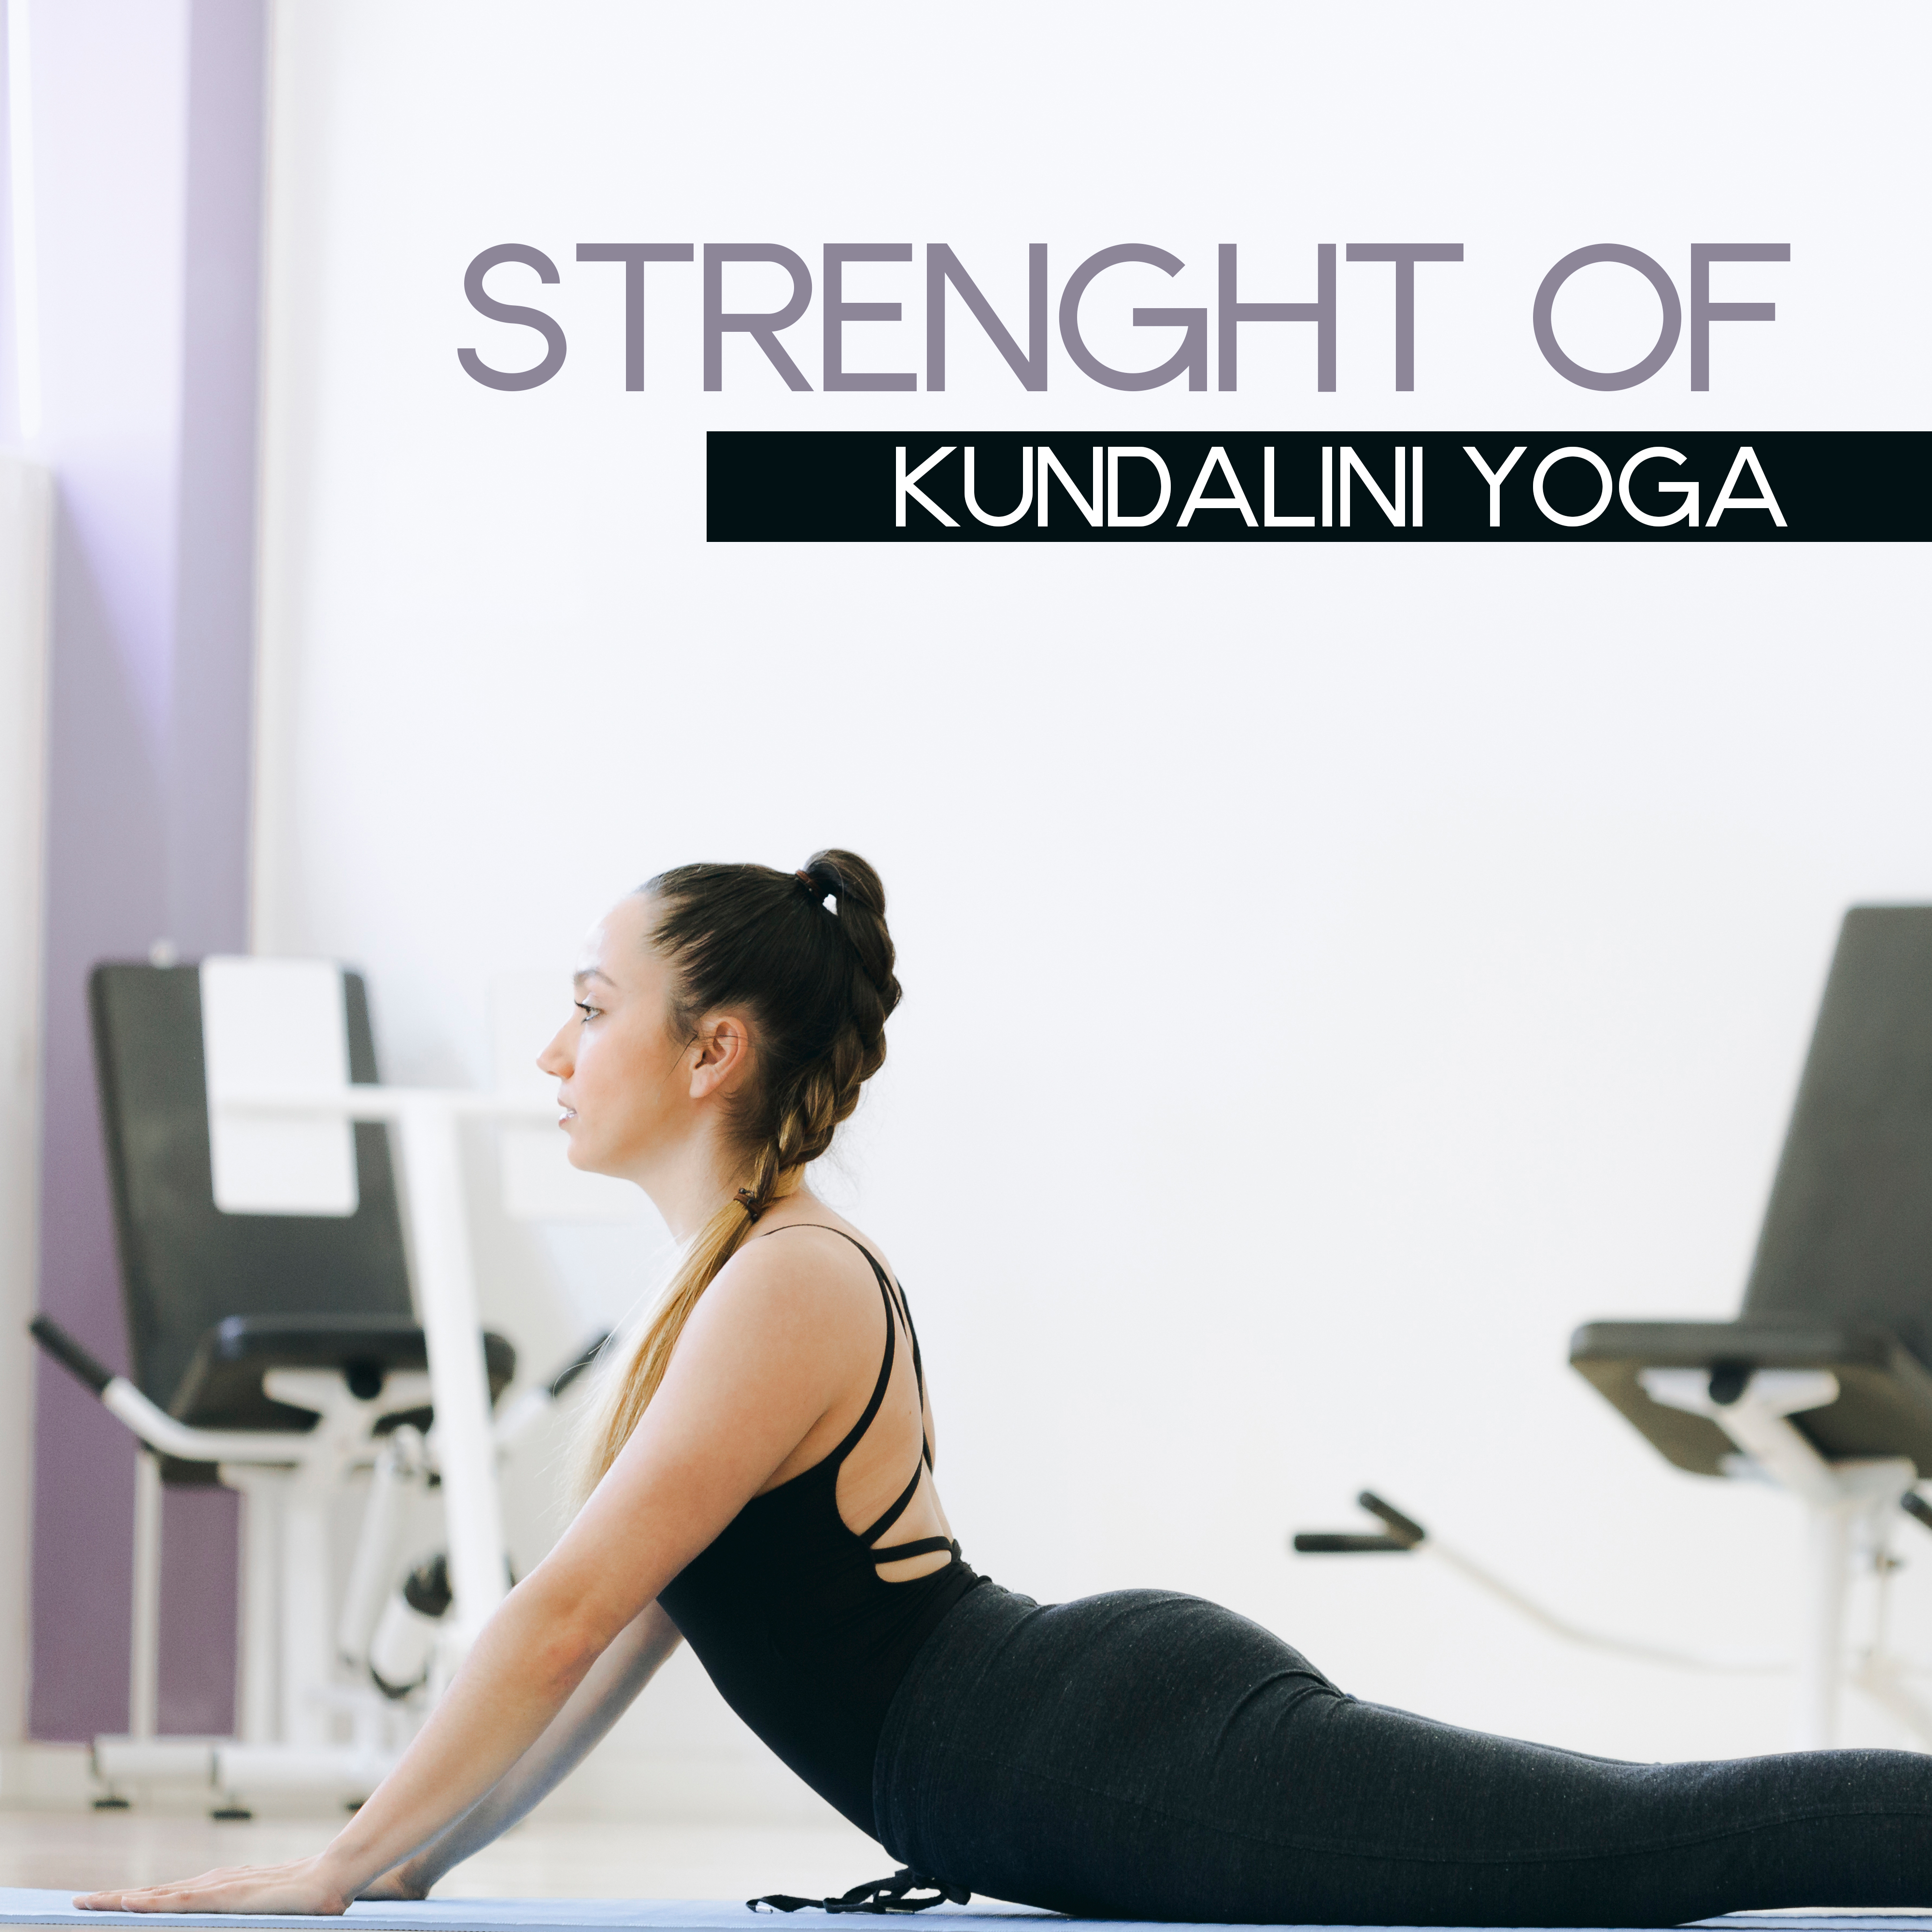 Strenght of Kundalini Yoga